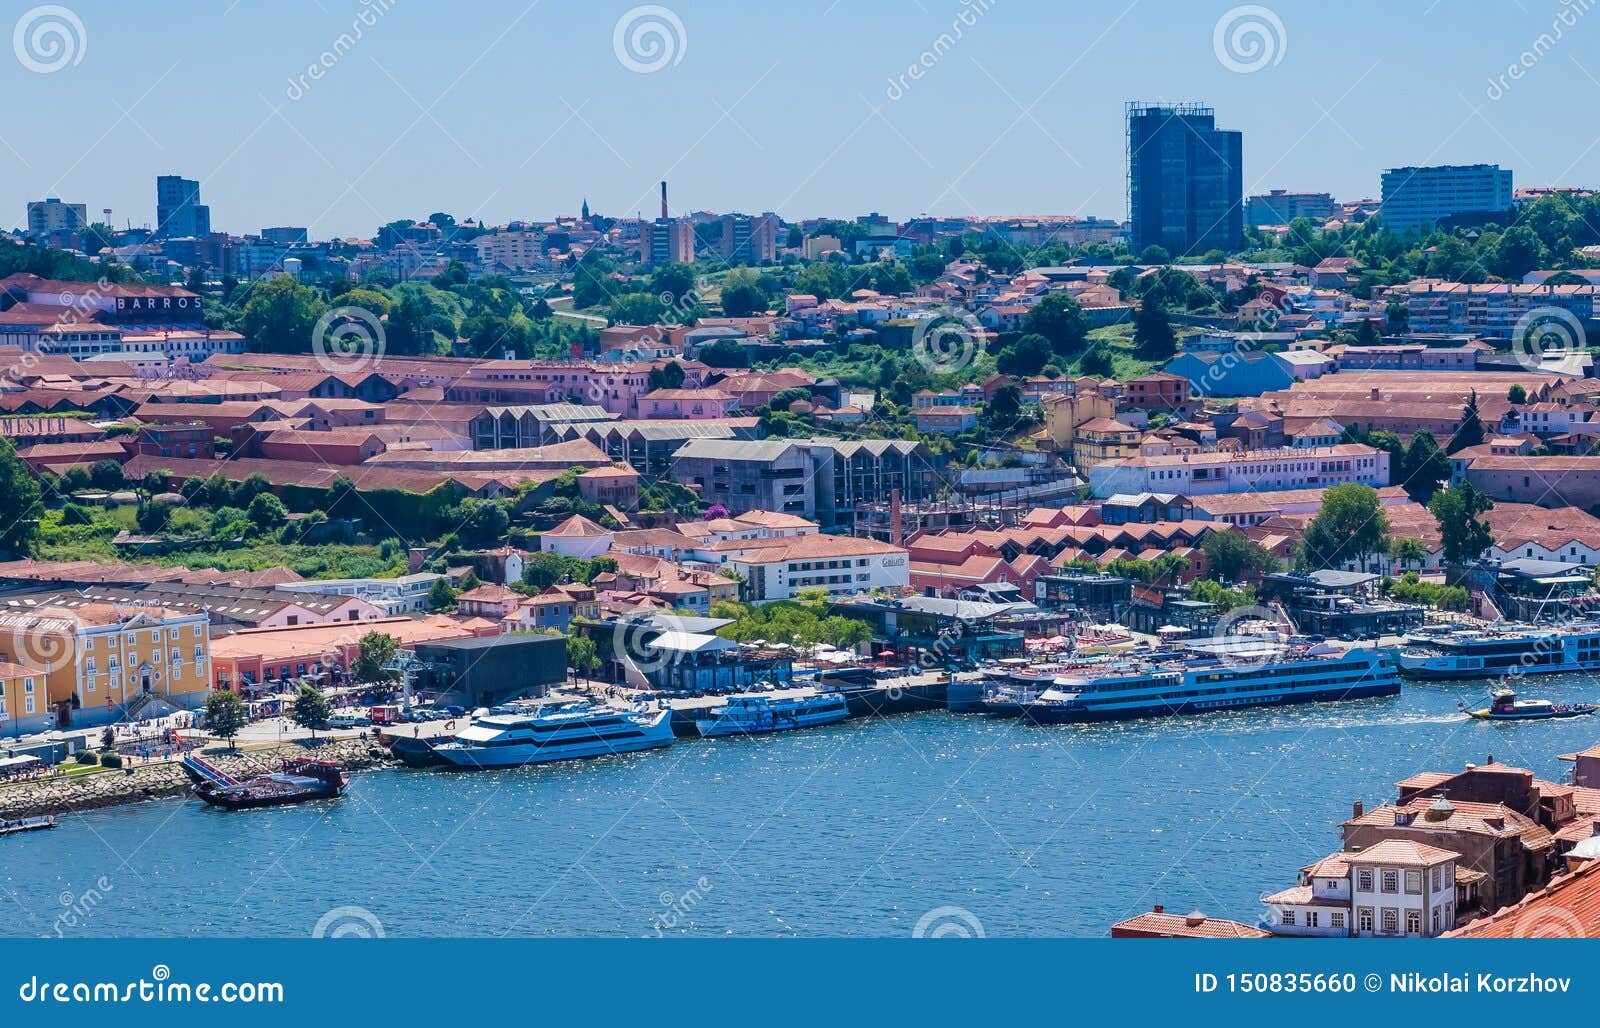 view of porto across river duoro towards vila nova de gaia, porto, portugal. vila nova de gaia is famed for housing